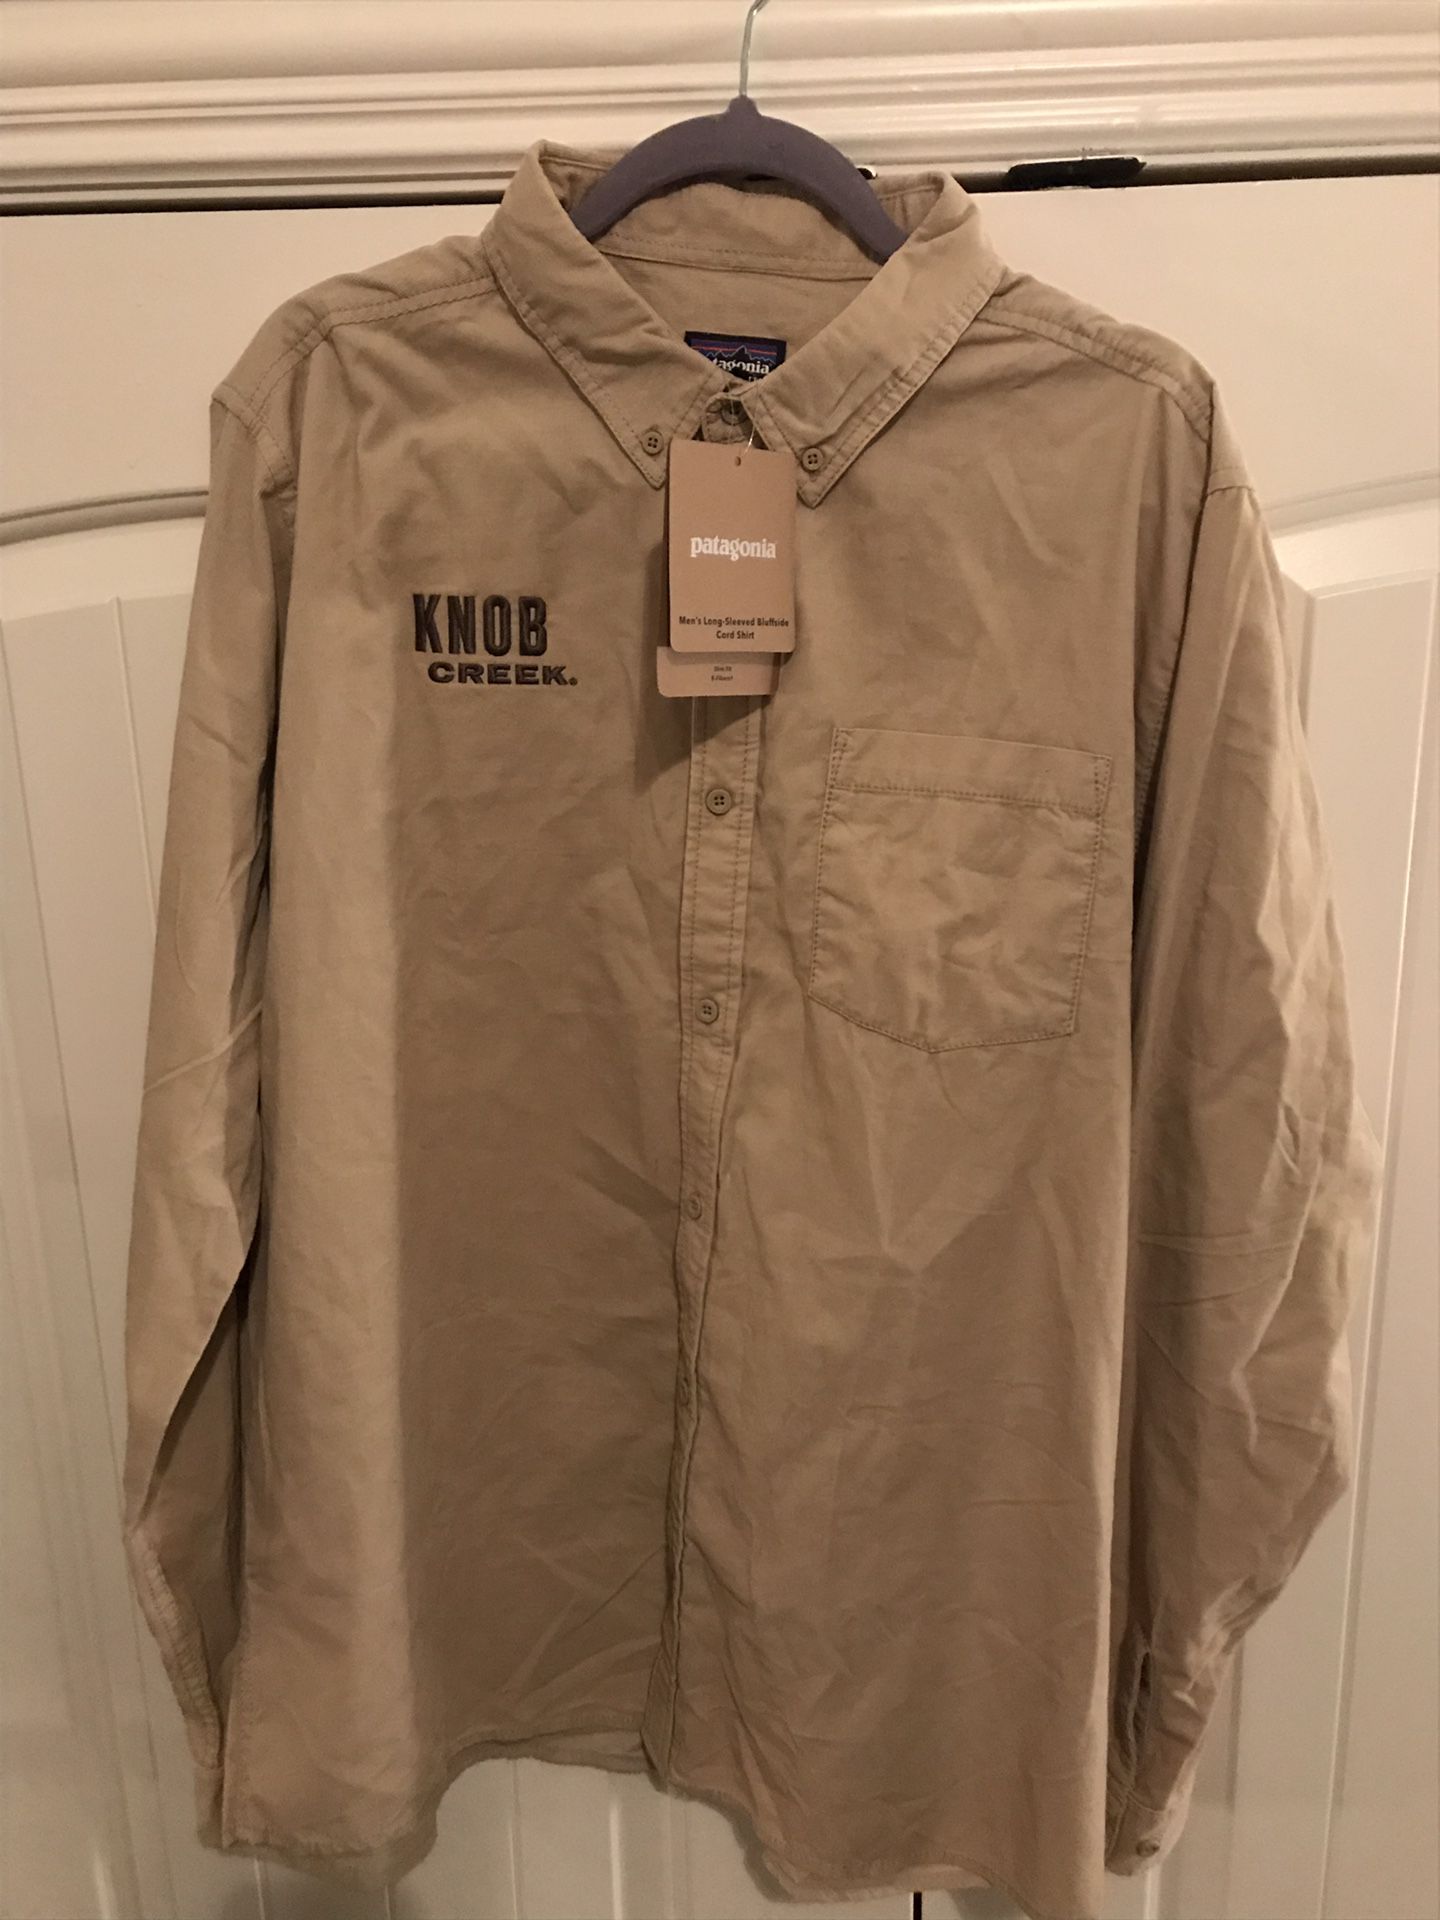 Men’s XL Patagonia Long sleeve Bluffside Cord Shirt